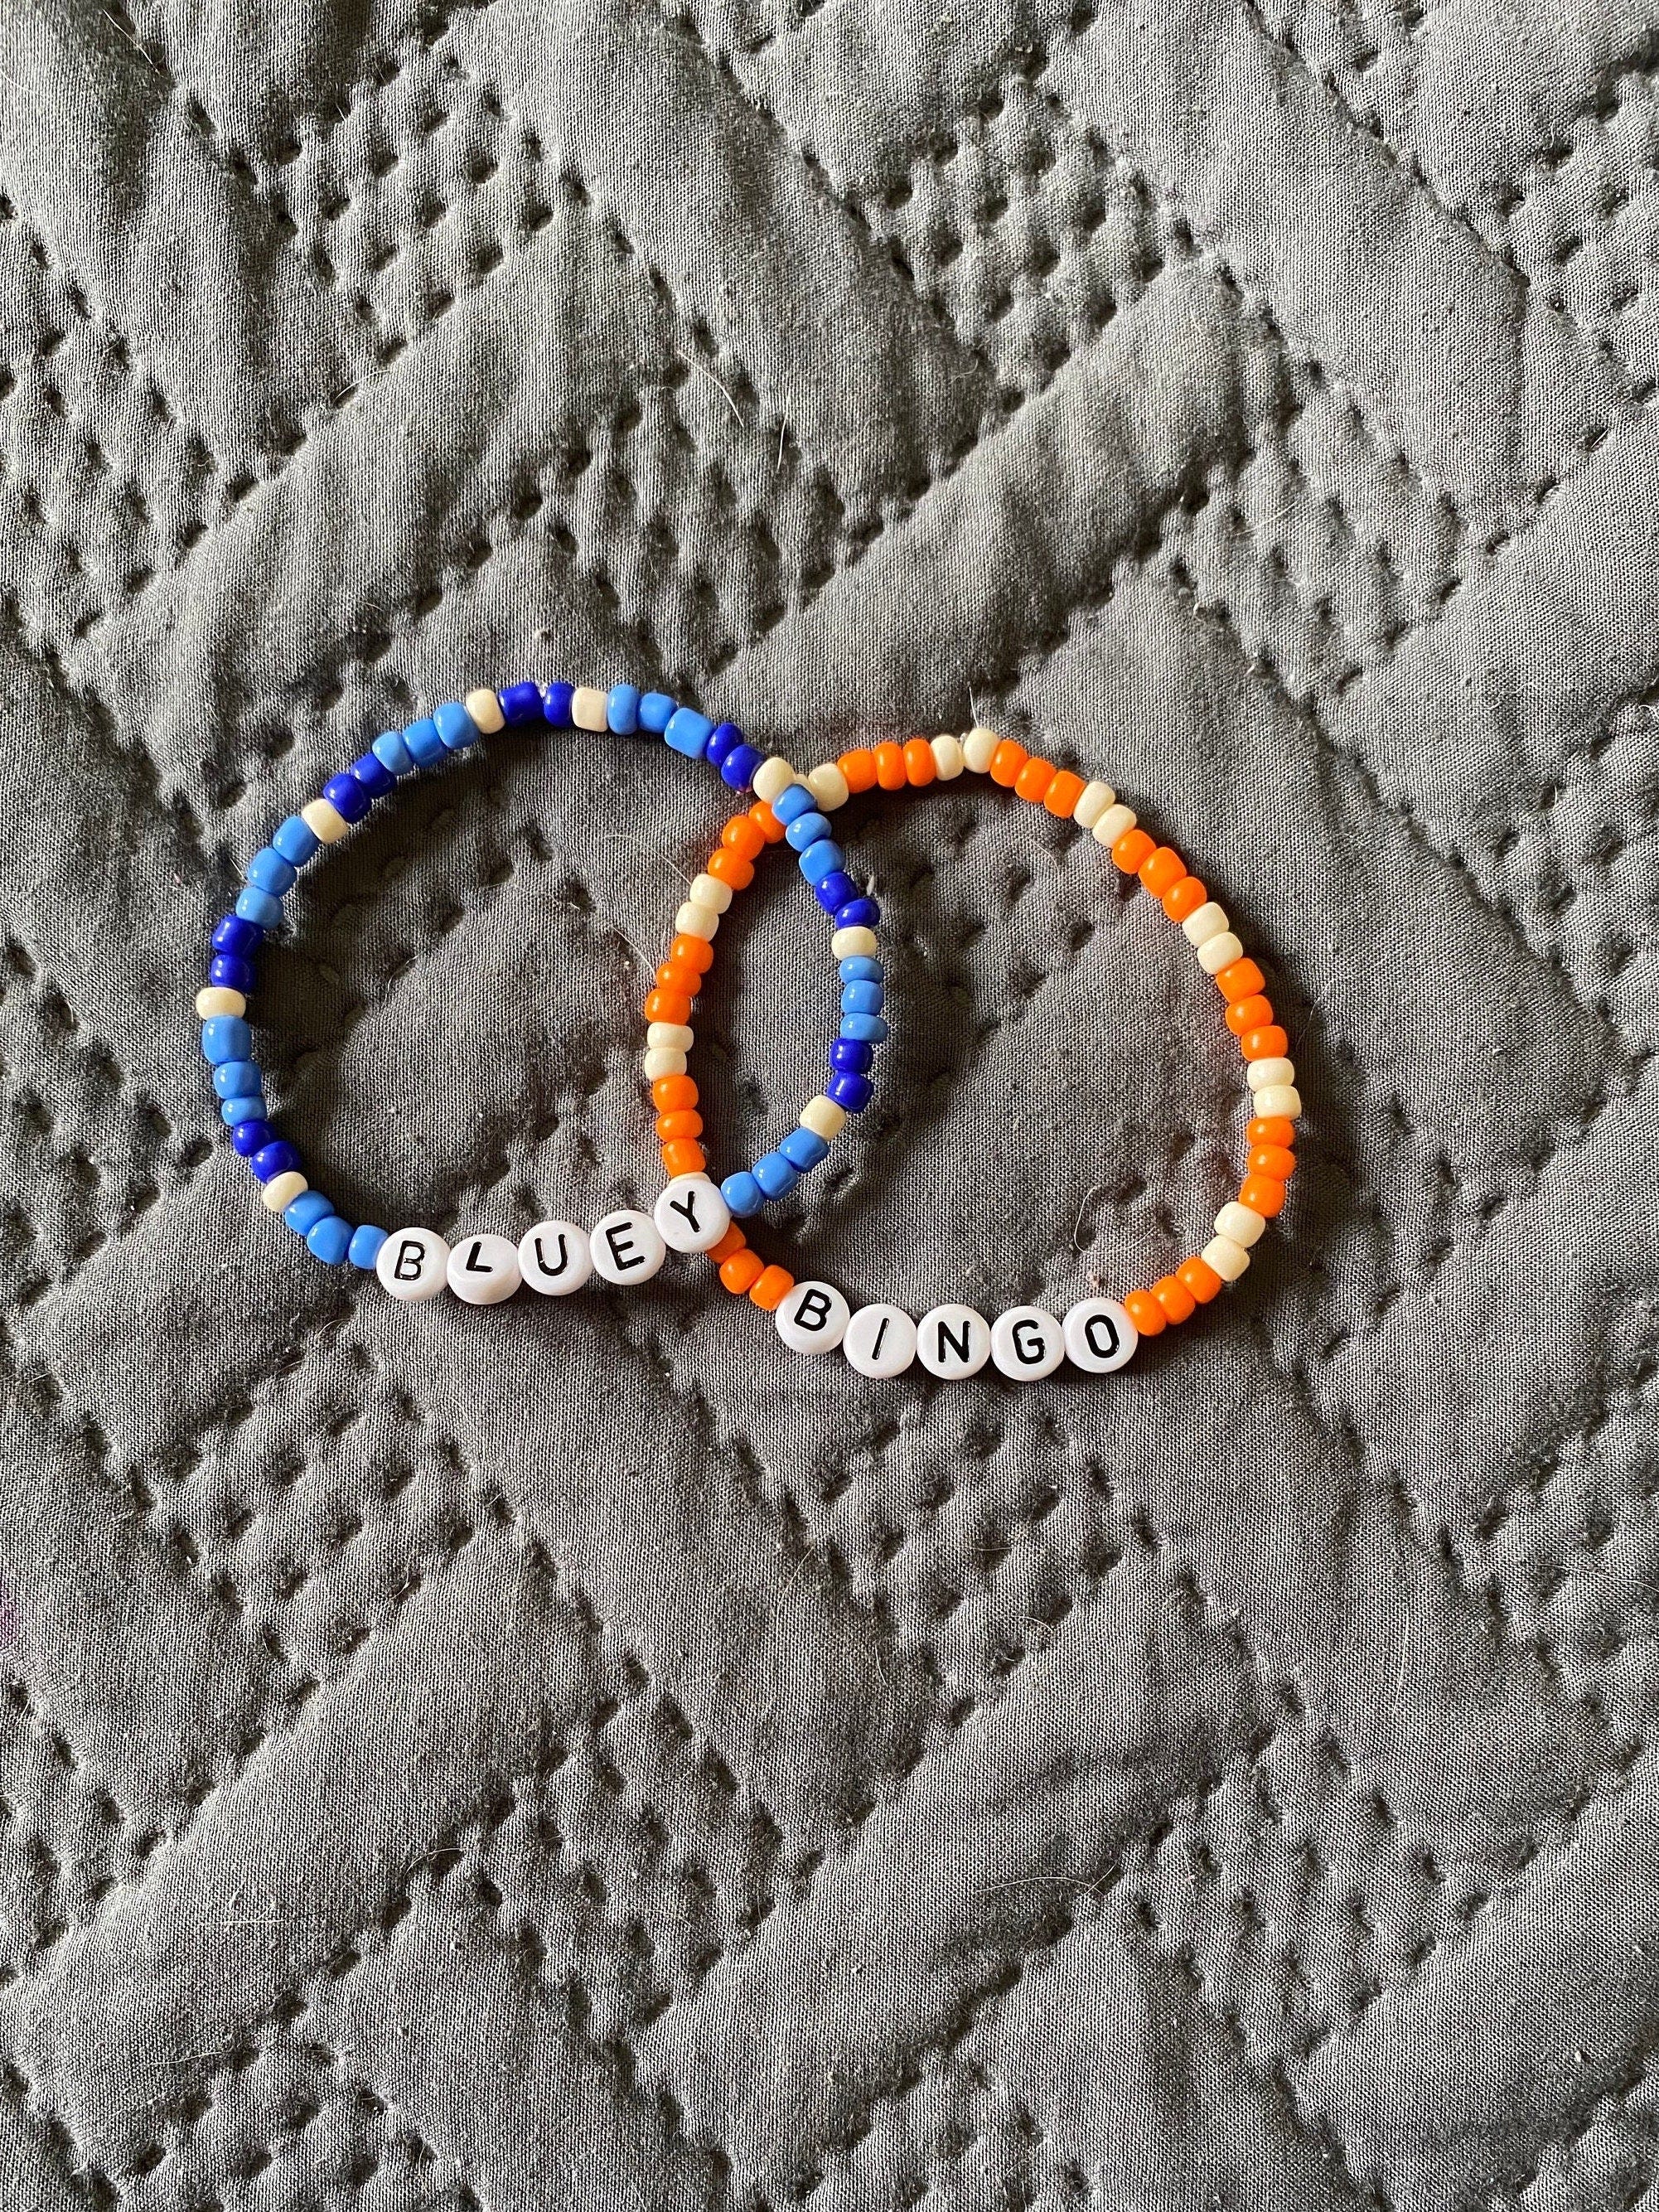 Bluey and Bingo inspired friendship or sibling bracelets. Disney Channel Bluey bracelets